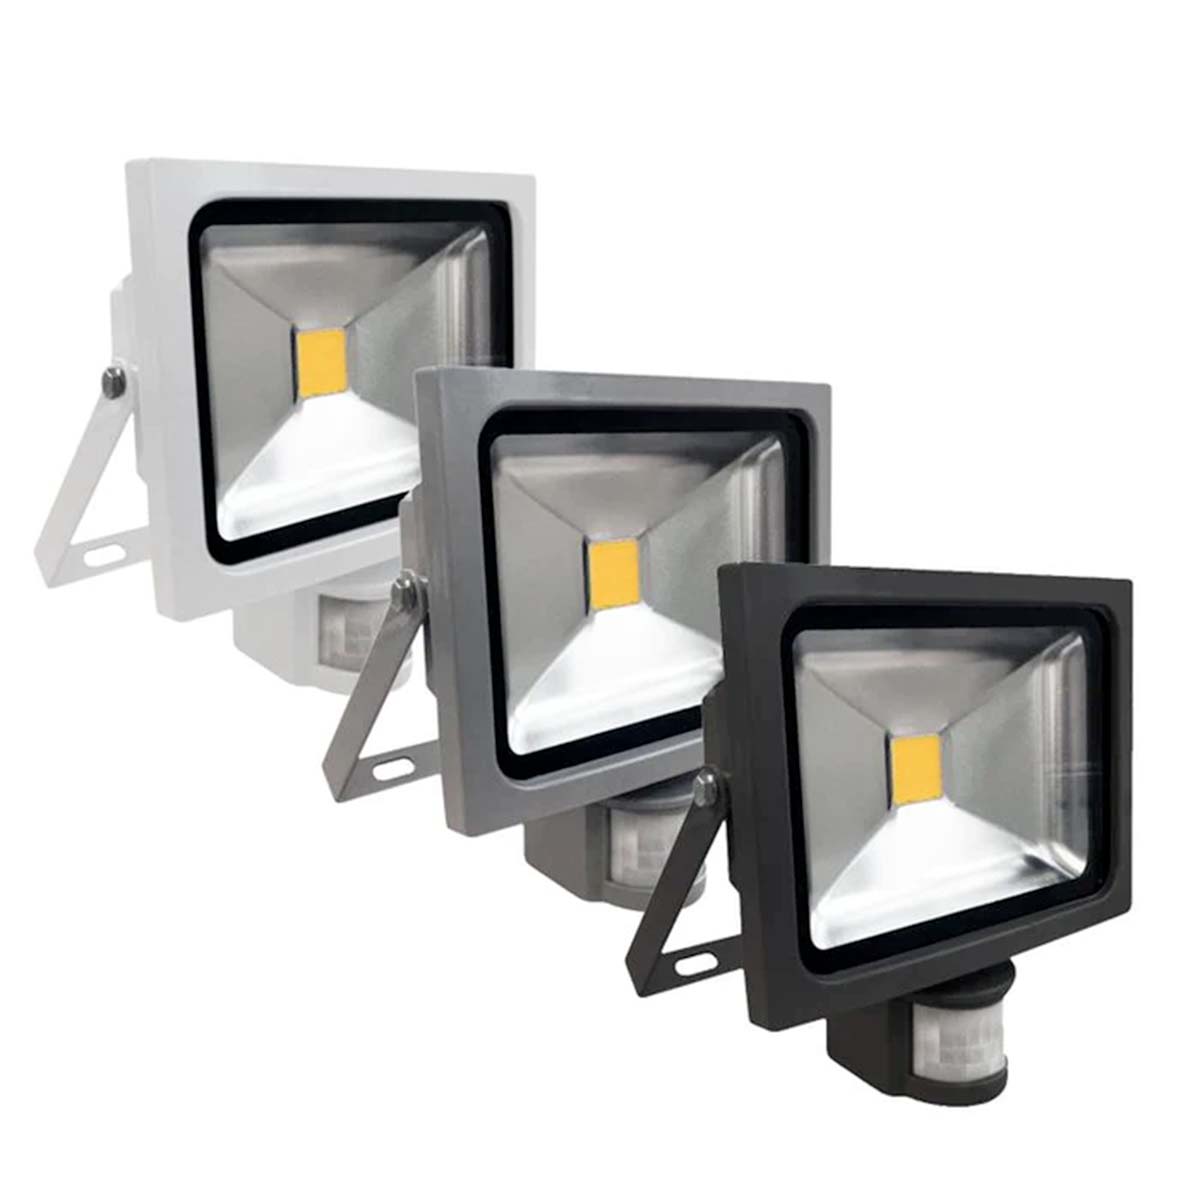 G.W.S LED Wholesale Classic LED Floodlight Classic LED Flood Light With PIR Motion Sensor, Buy 1 Get 1 Free